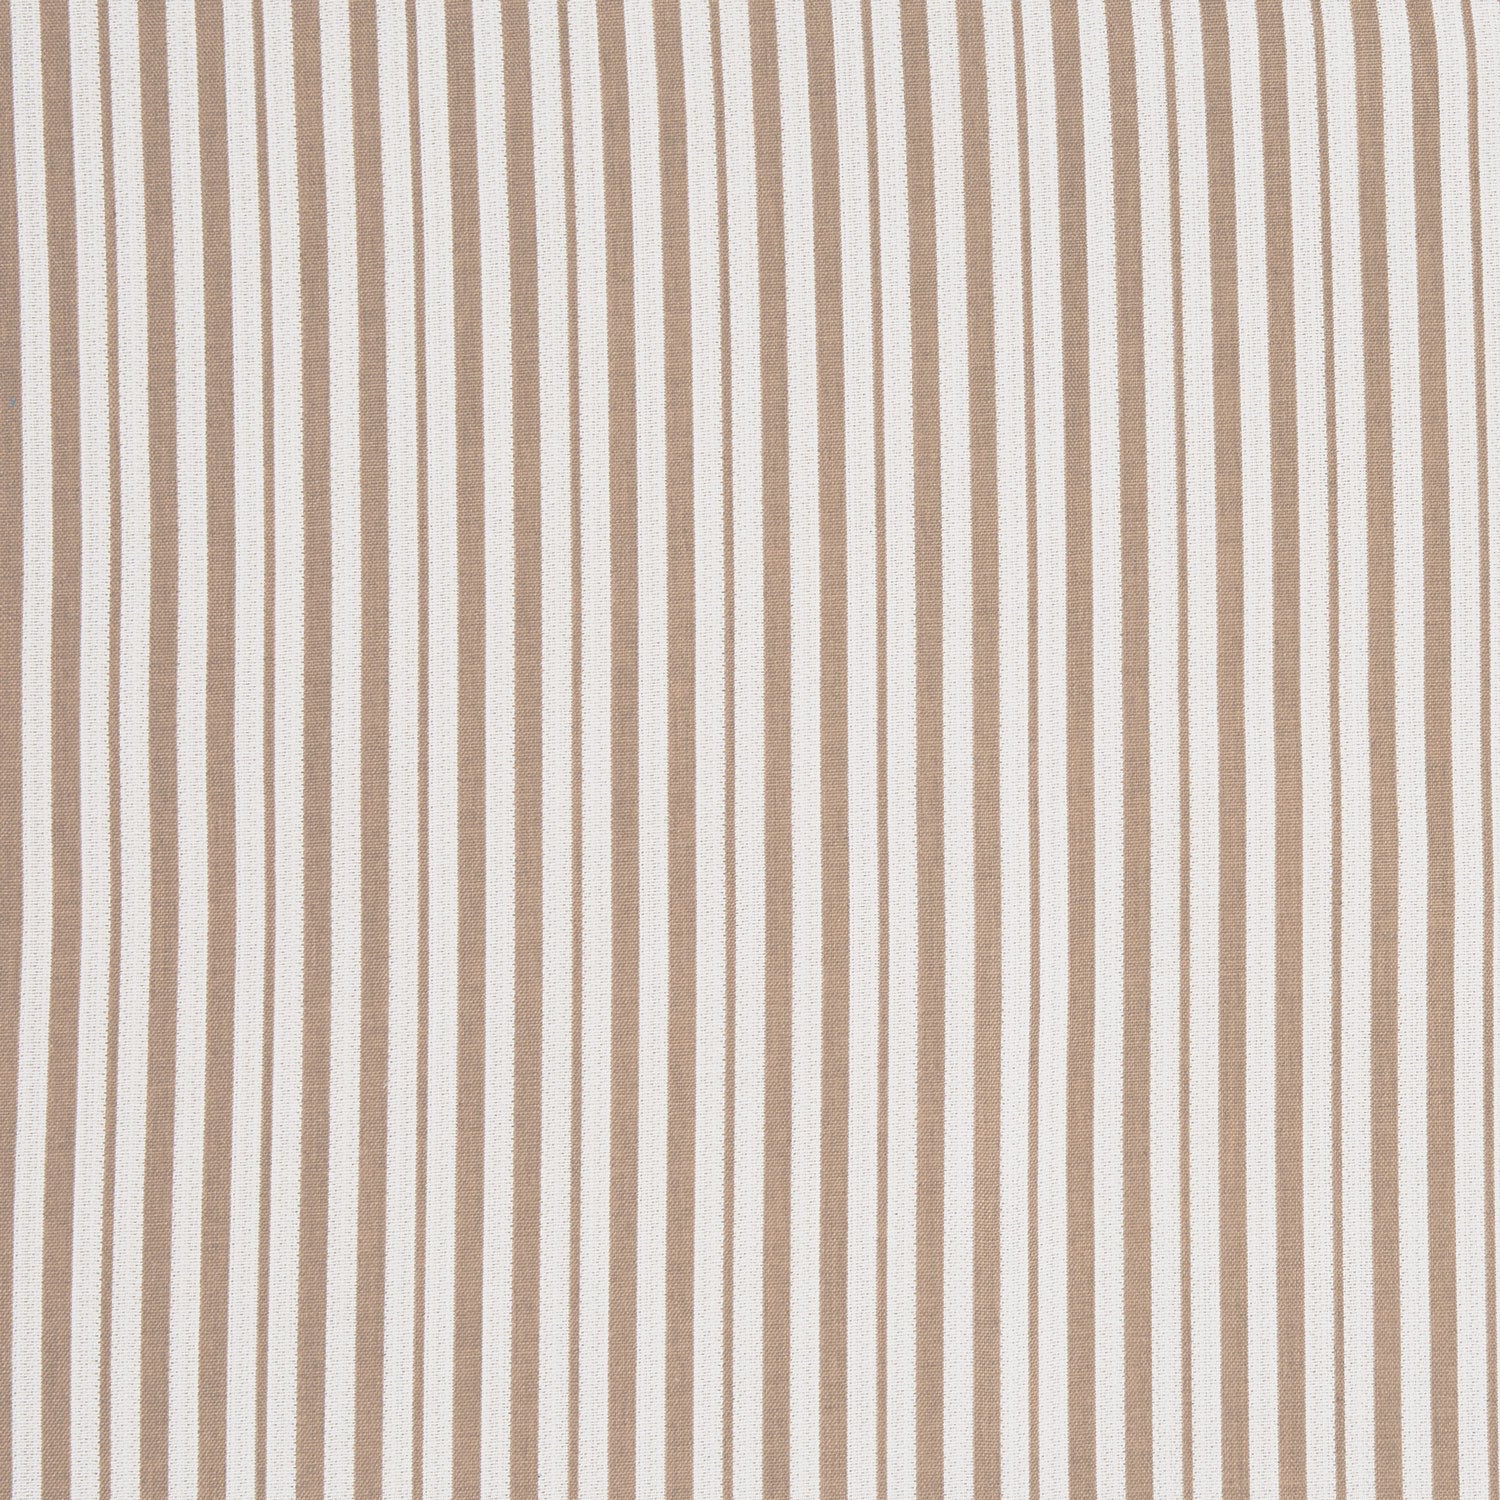 Gent Stripe Sand Performance Fabric Main